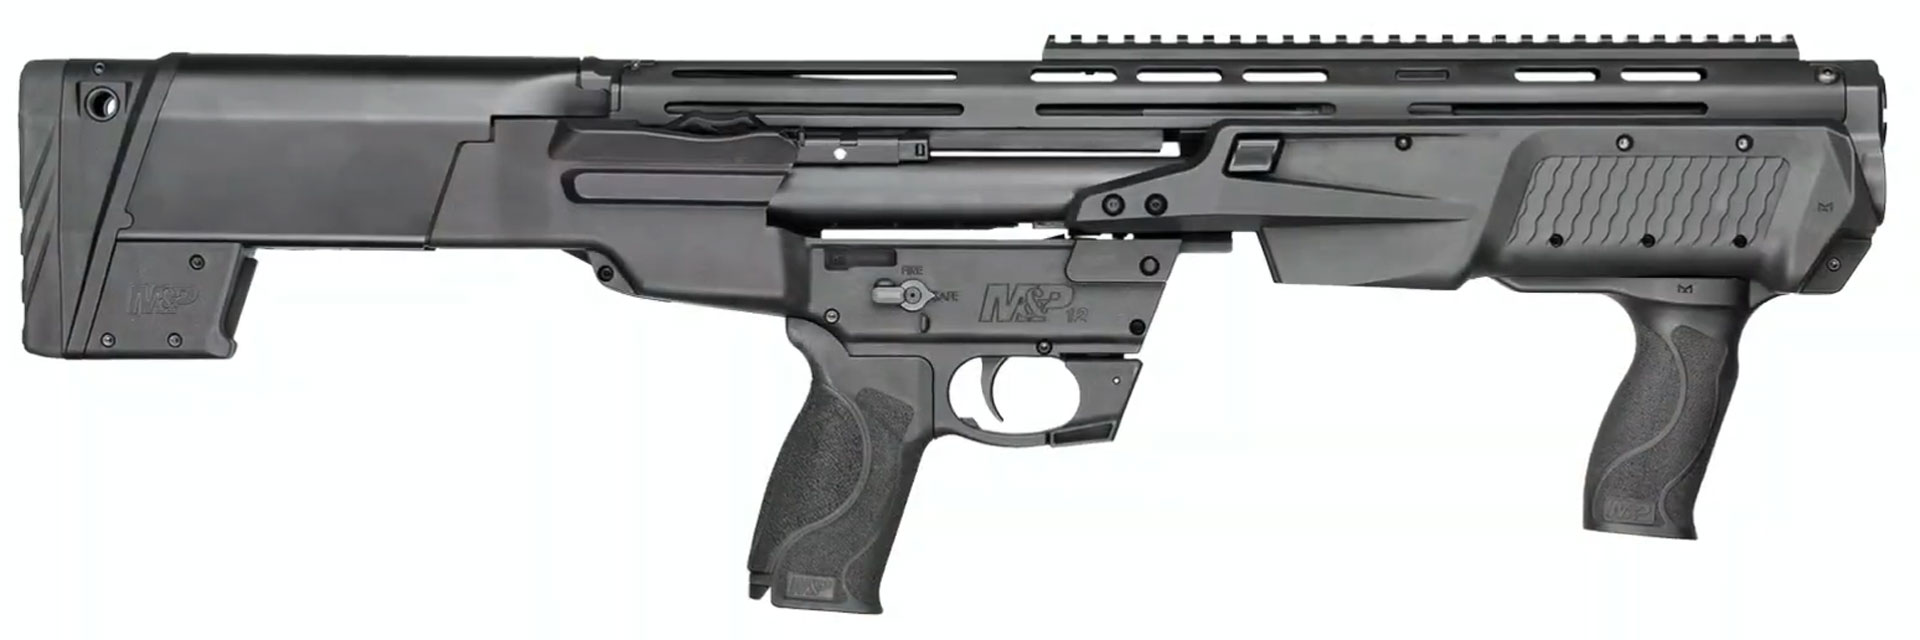 right-side view black smith & wesson M&P12 bullpup shotgun 12 gauge pump-action gun metal plastic